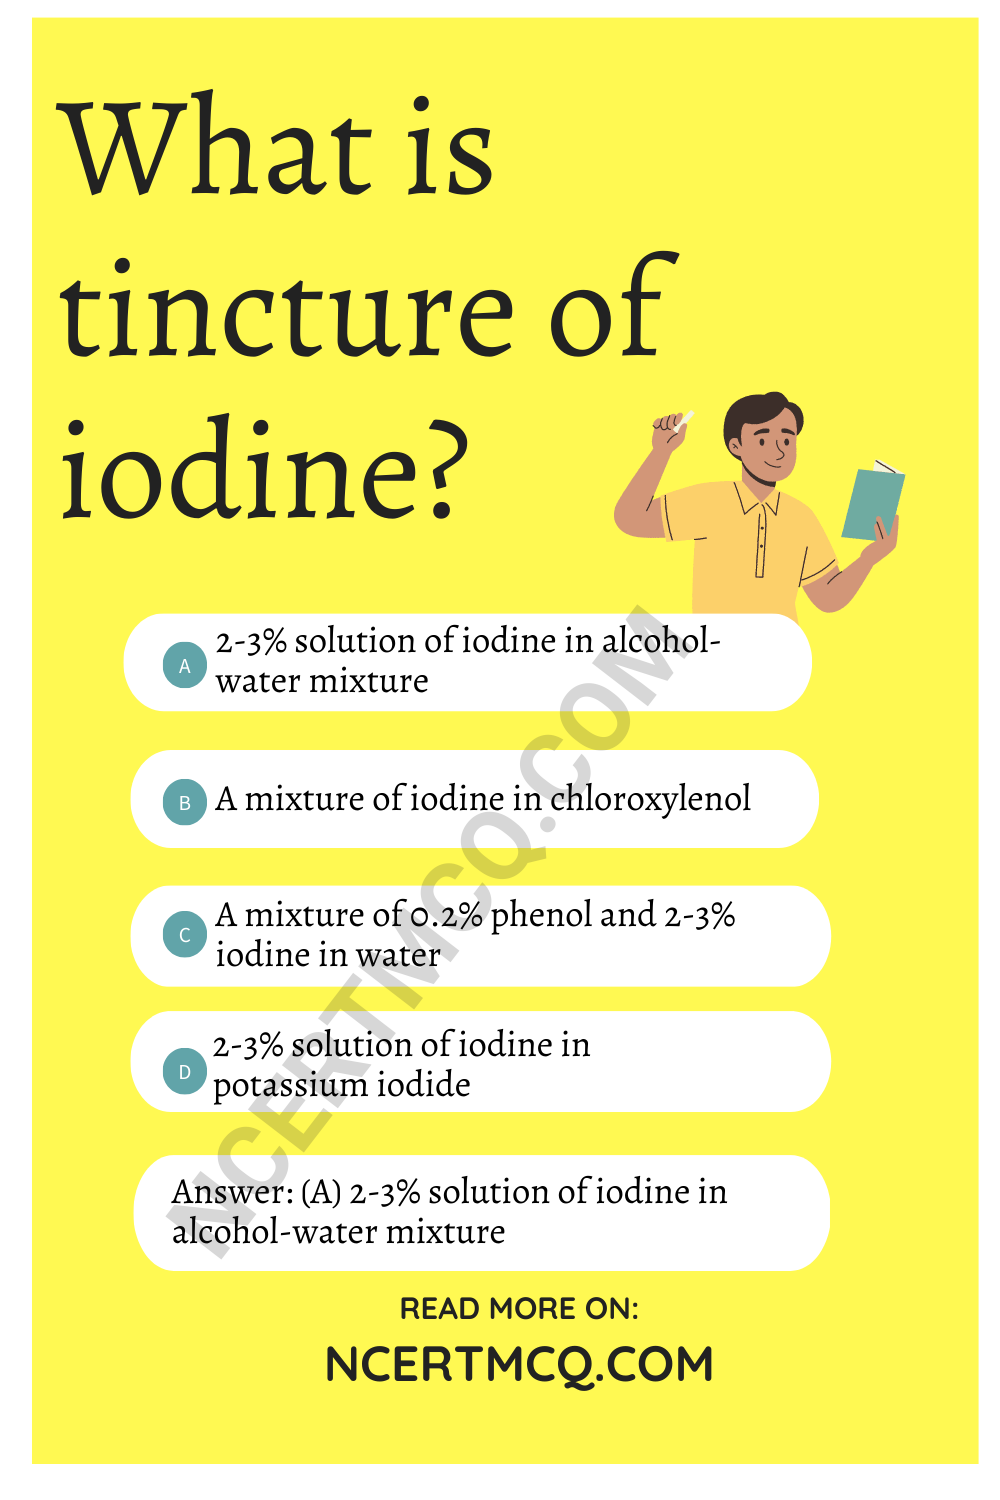 What is tincture of iodine?